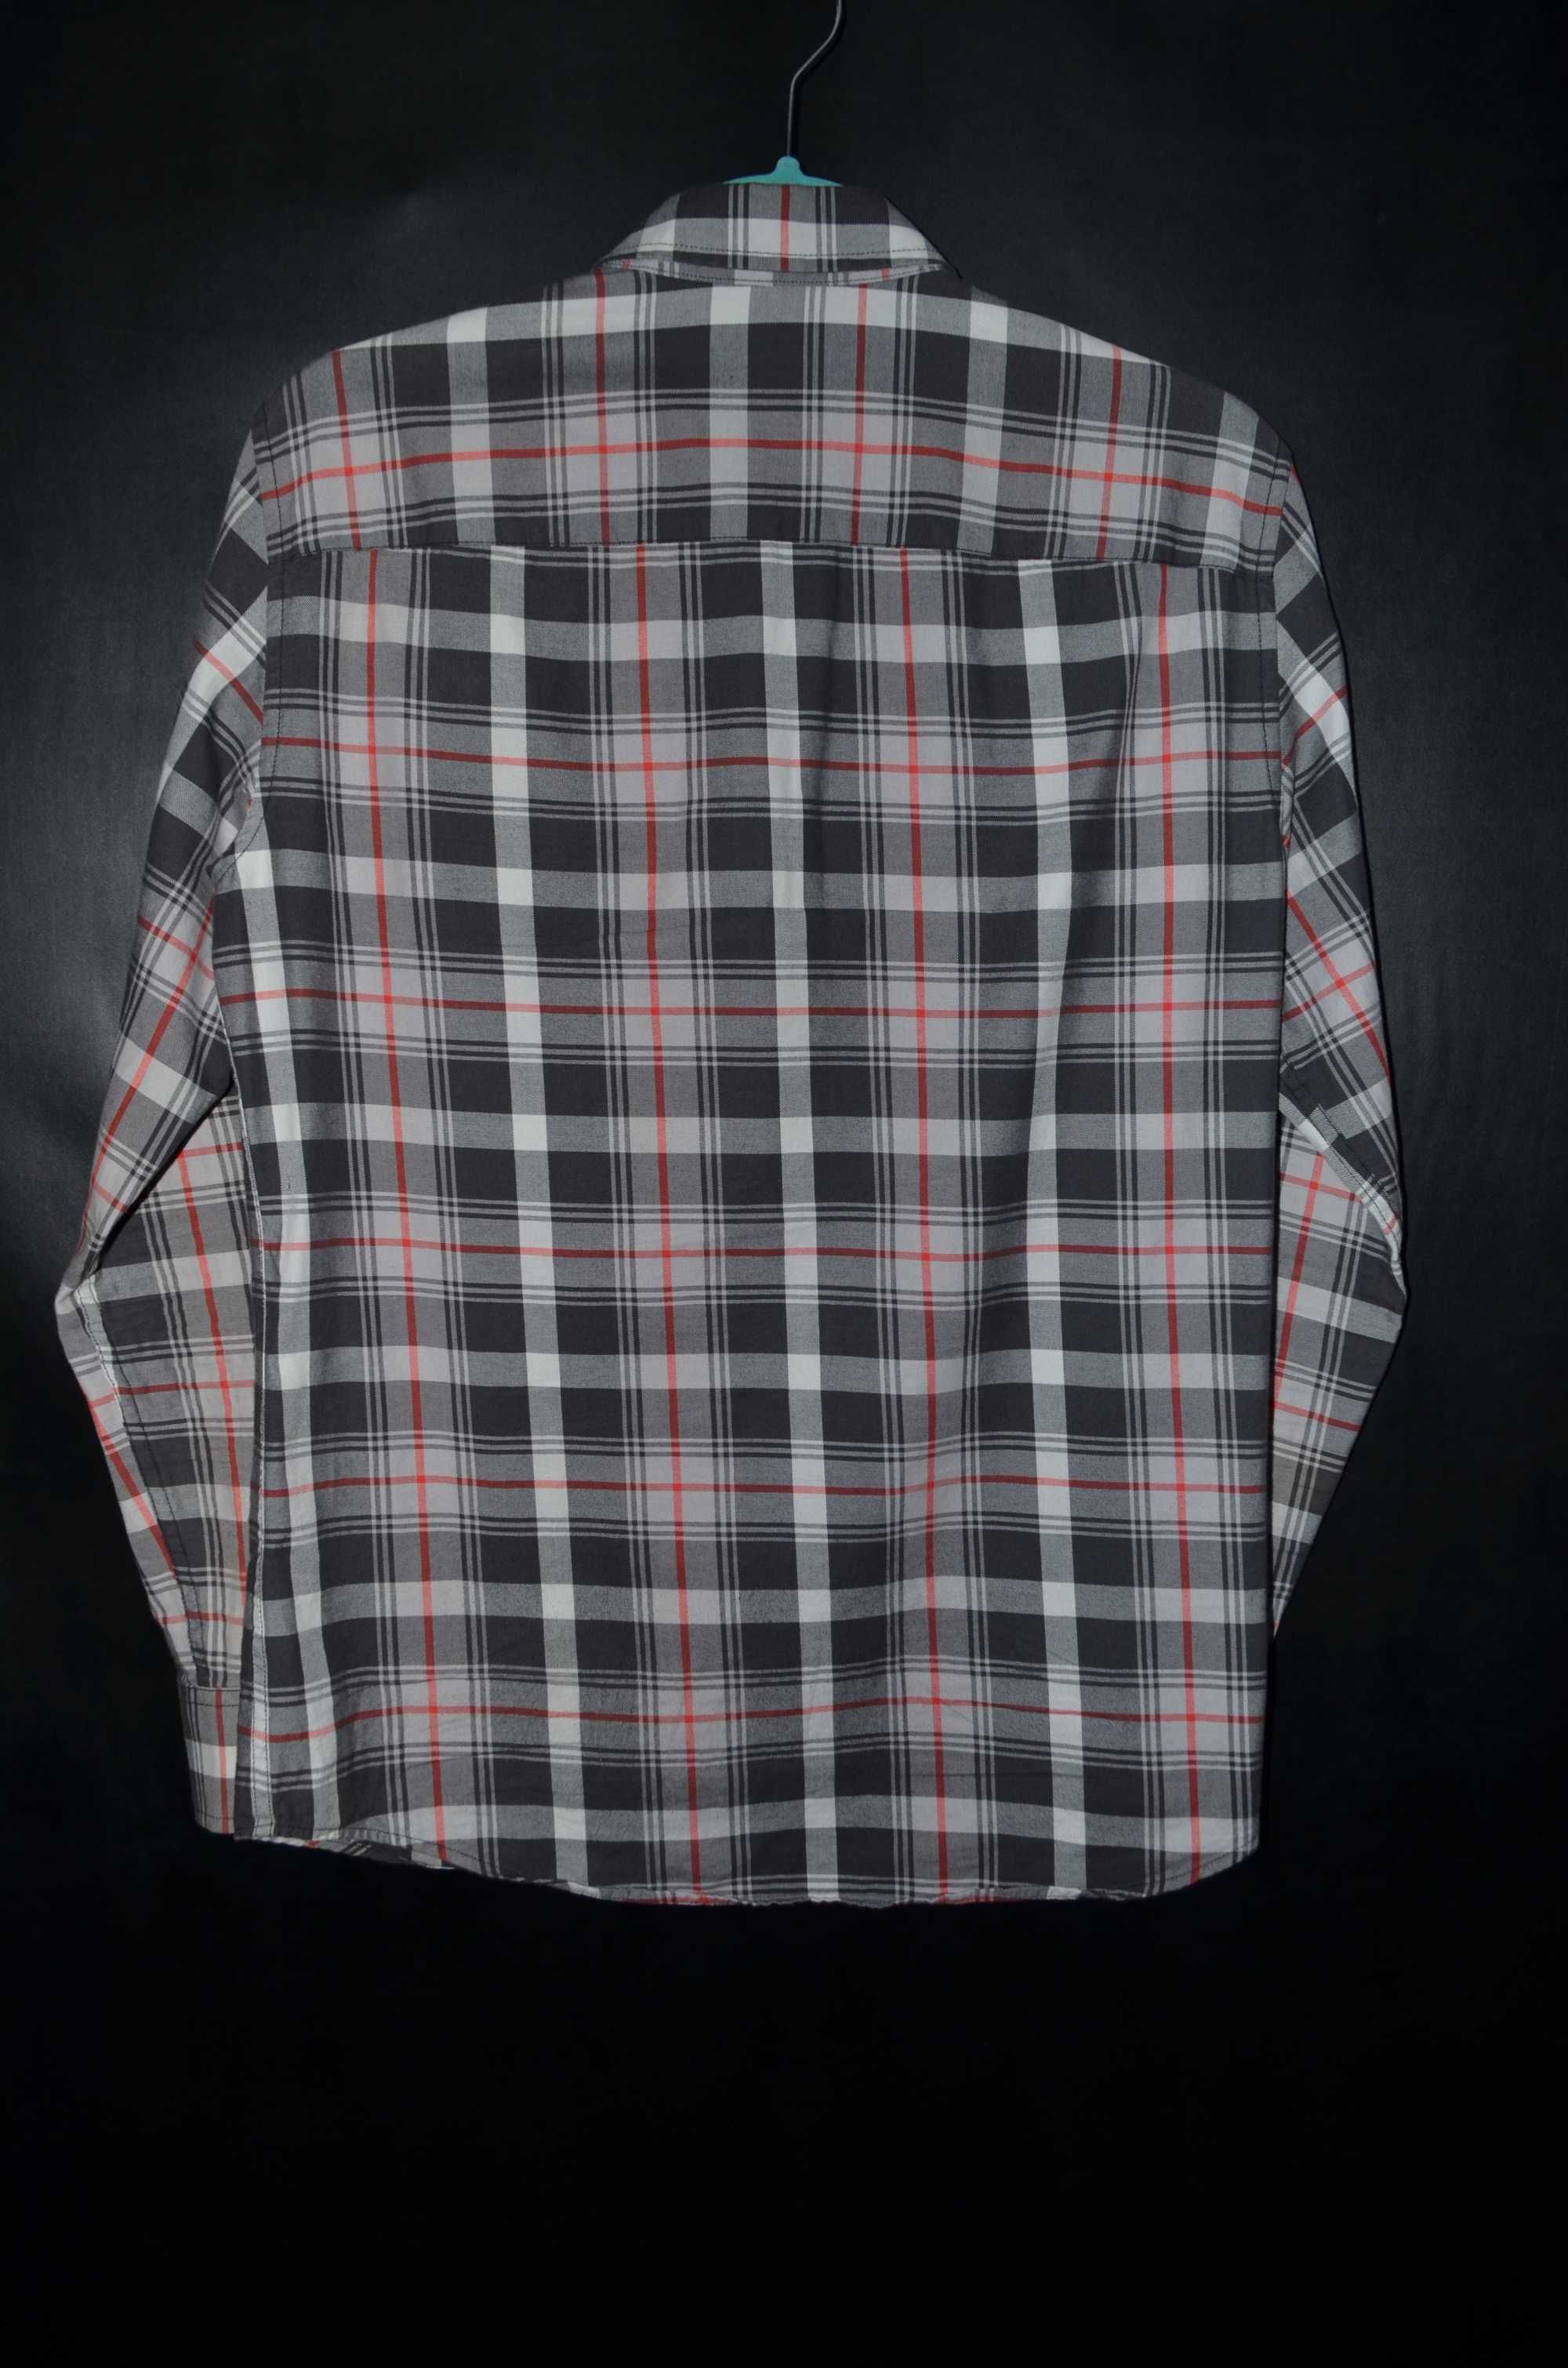 Рубашка Armani Exchange Mens Shirt Plaid Size XS, Сорочка